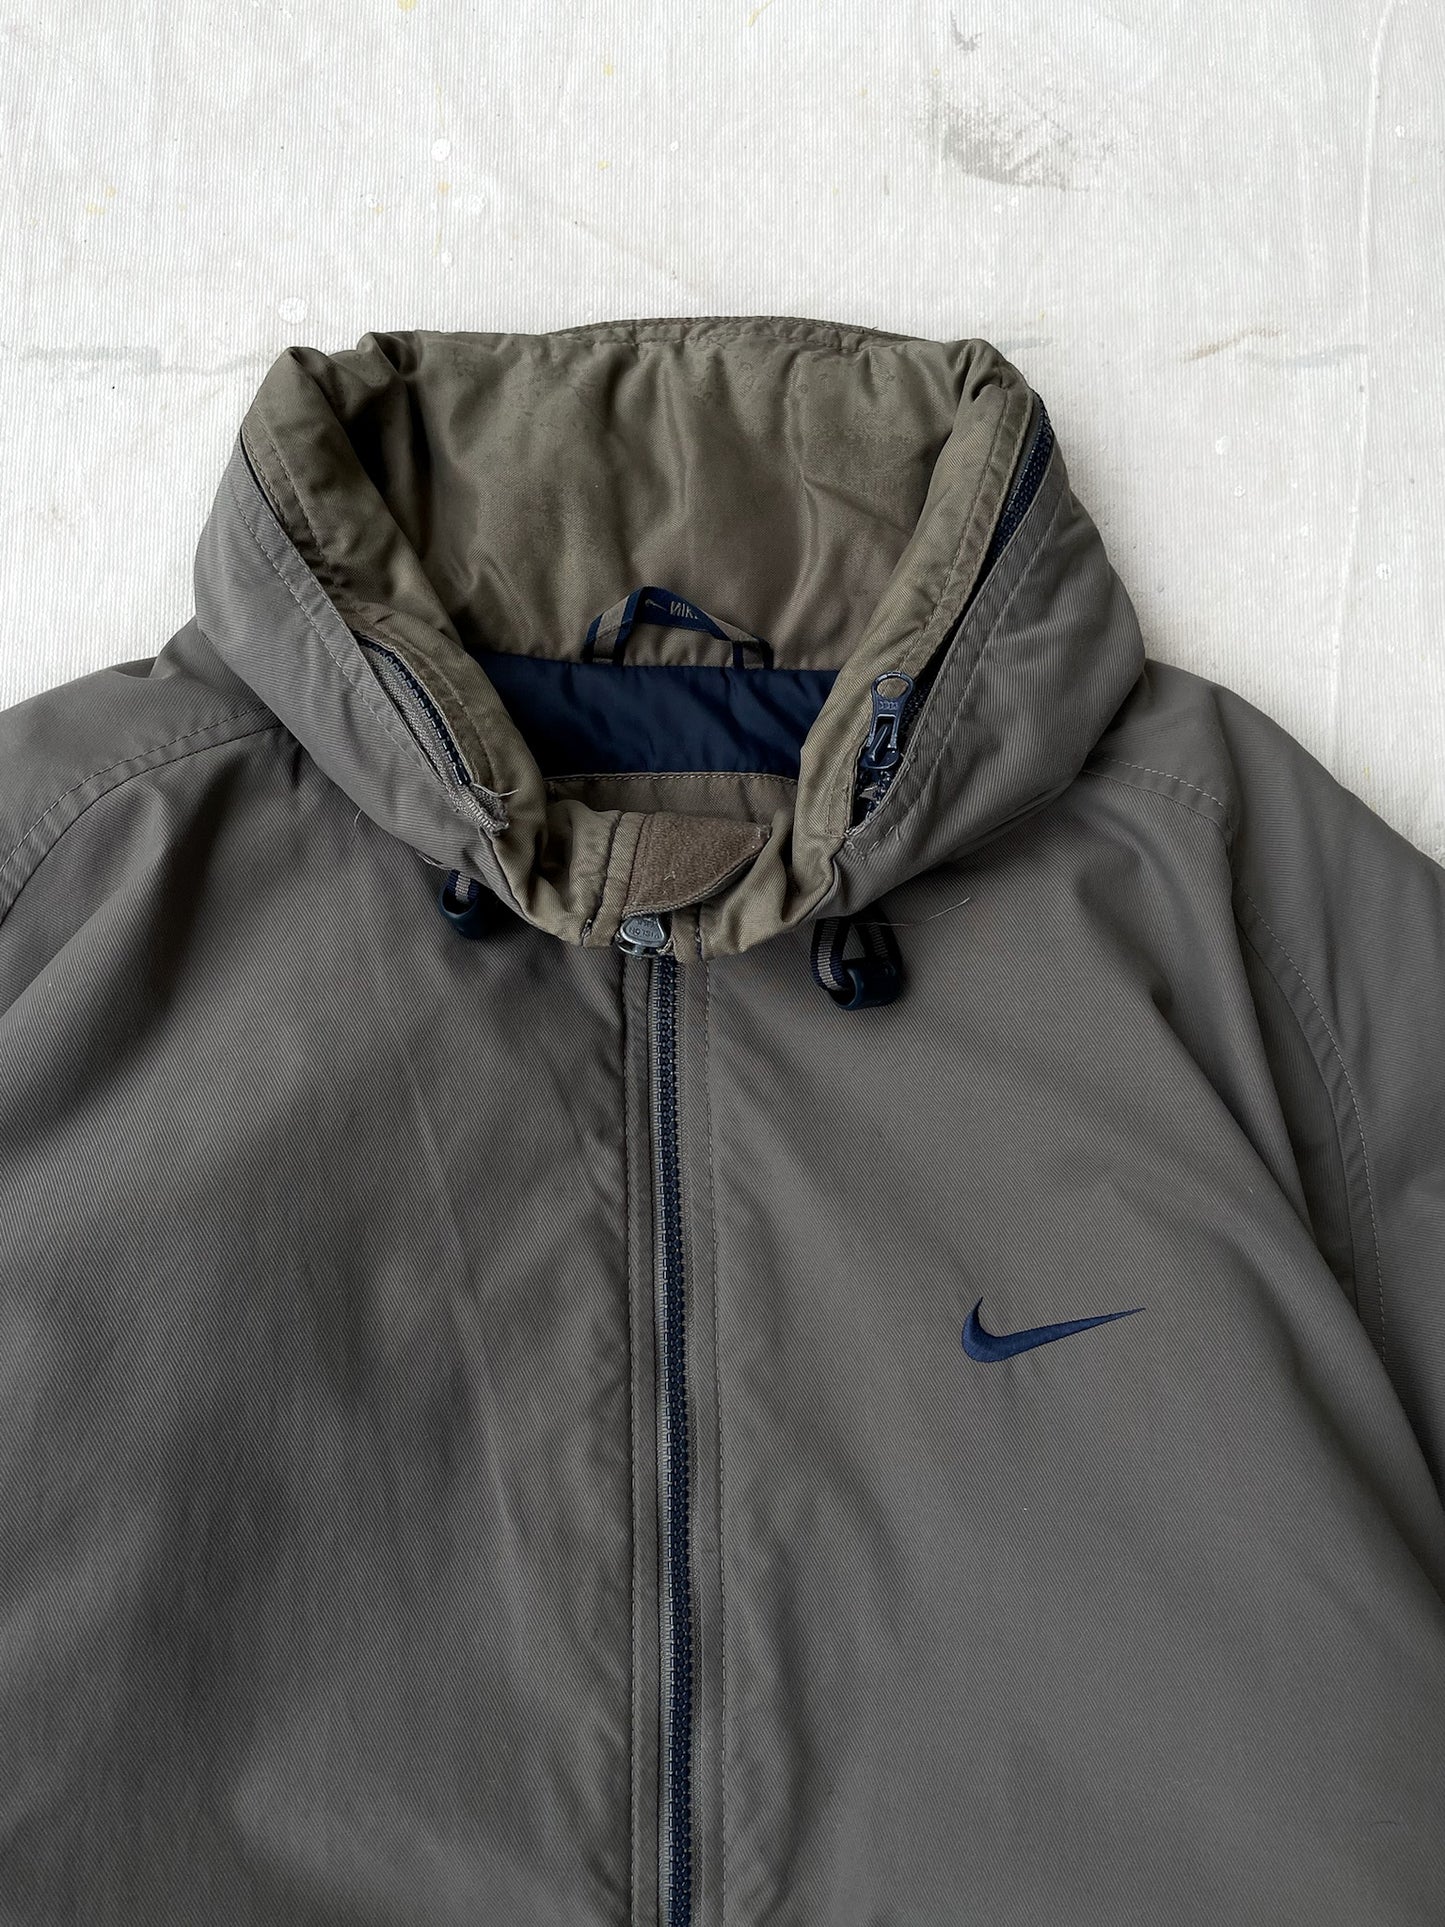 90’s Nike Jacket—[XL]